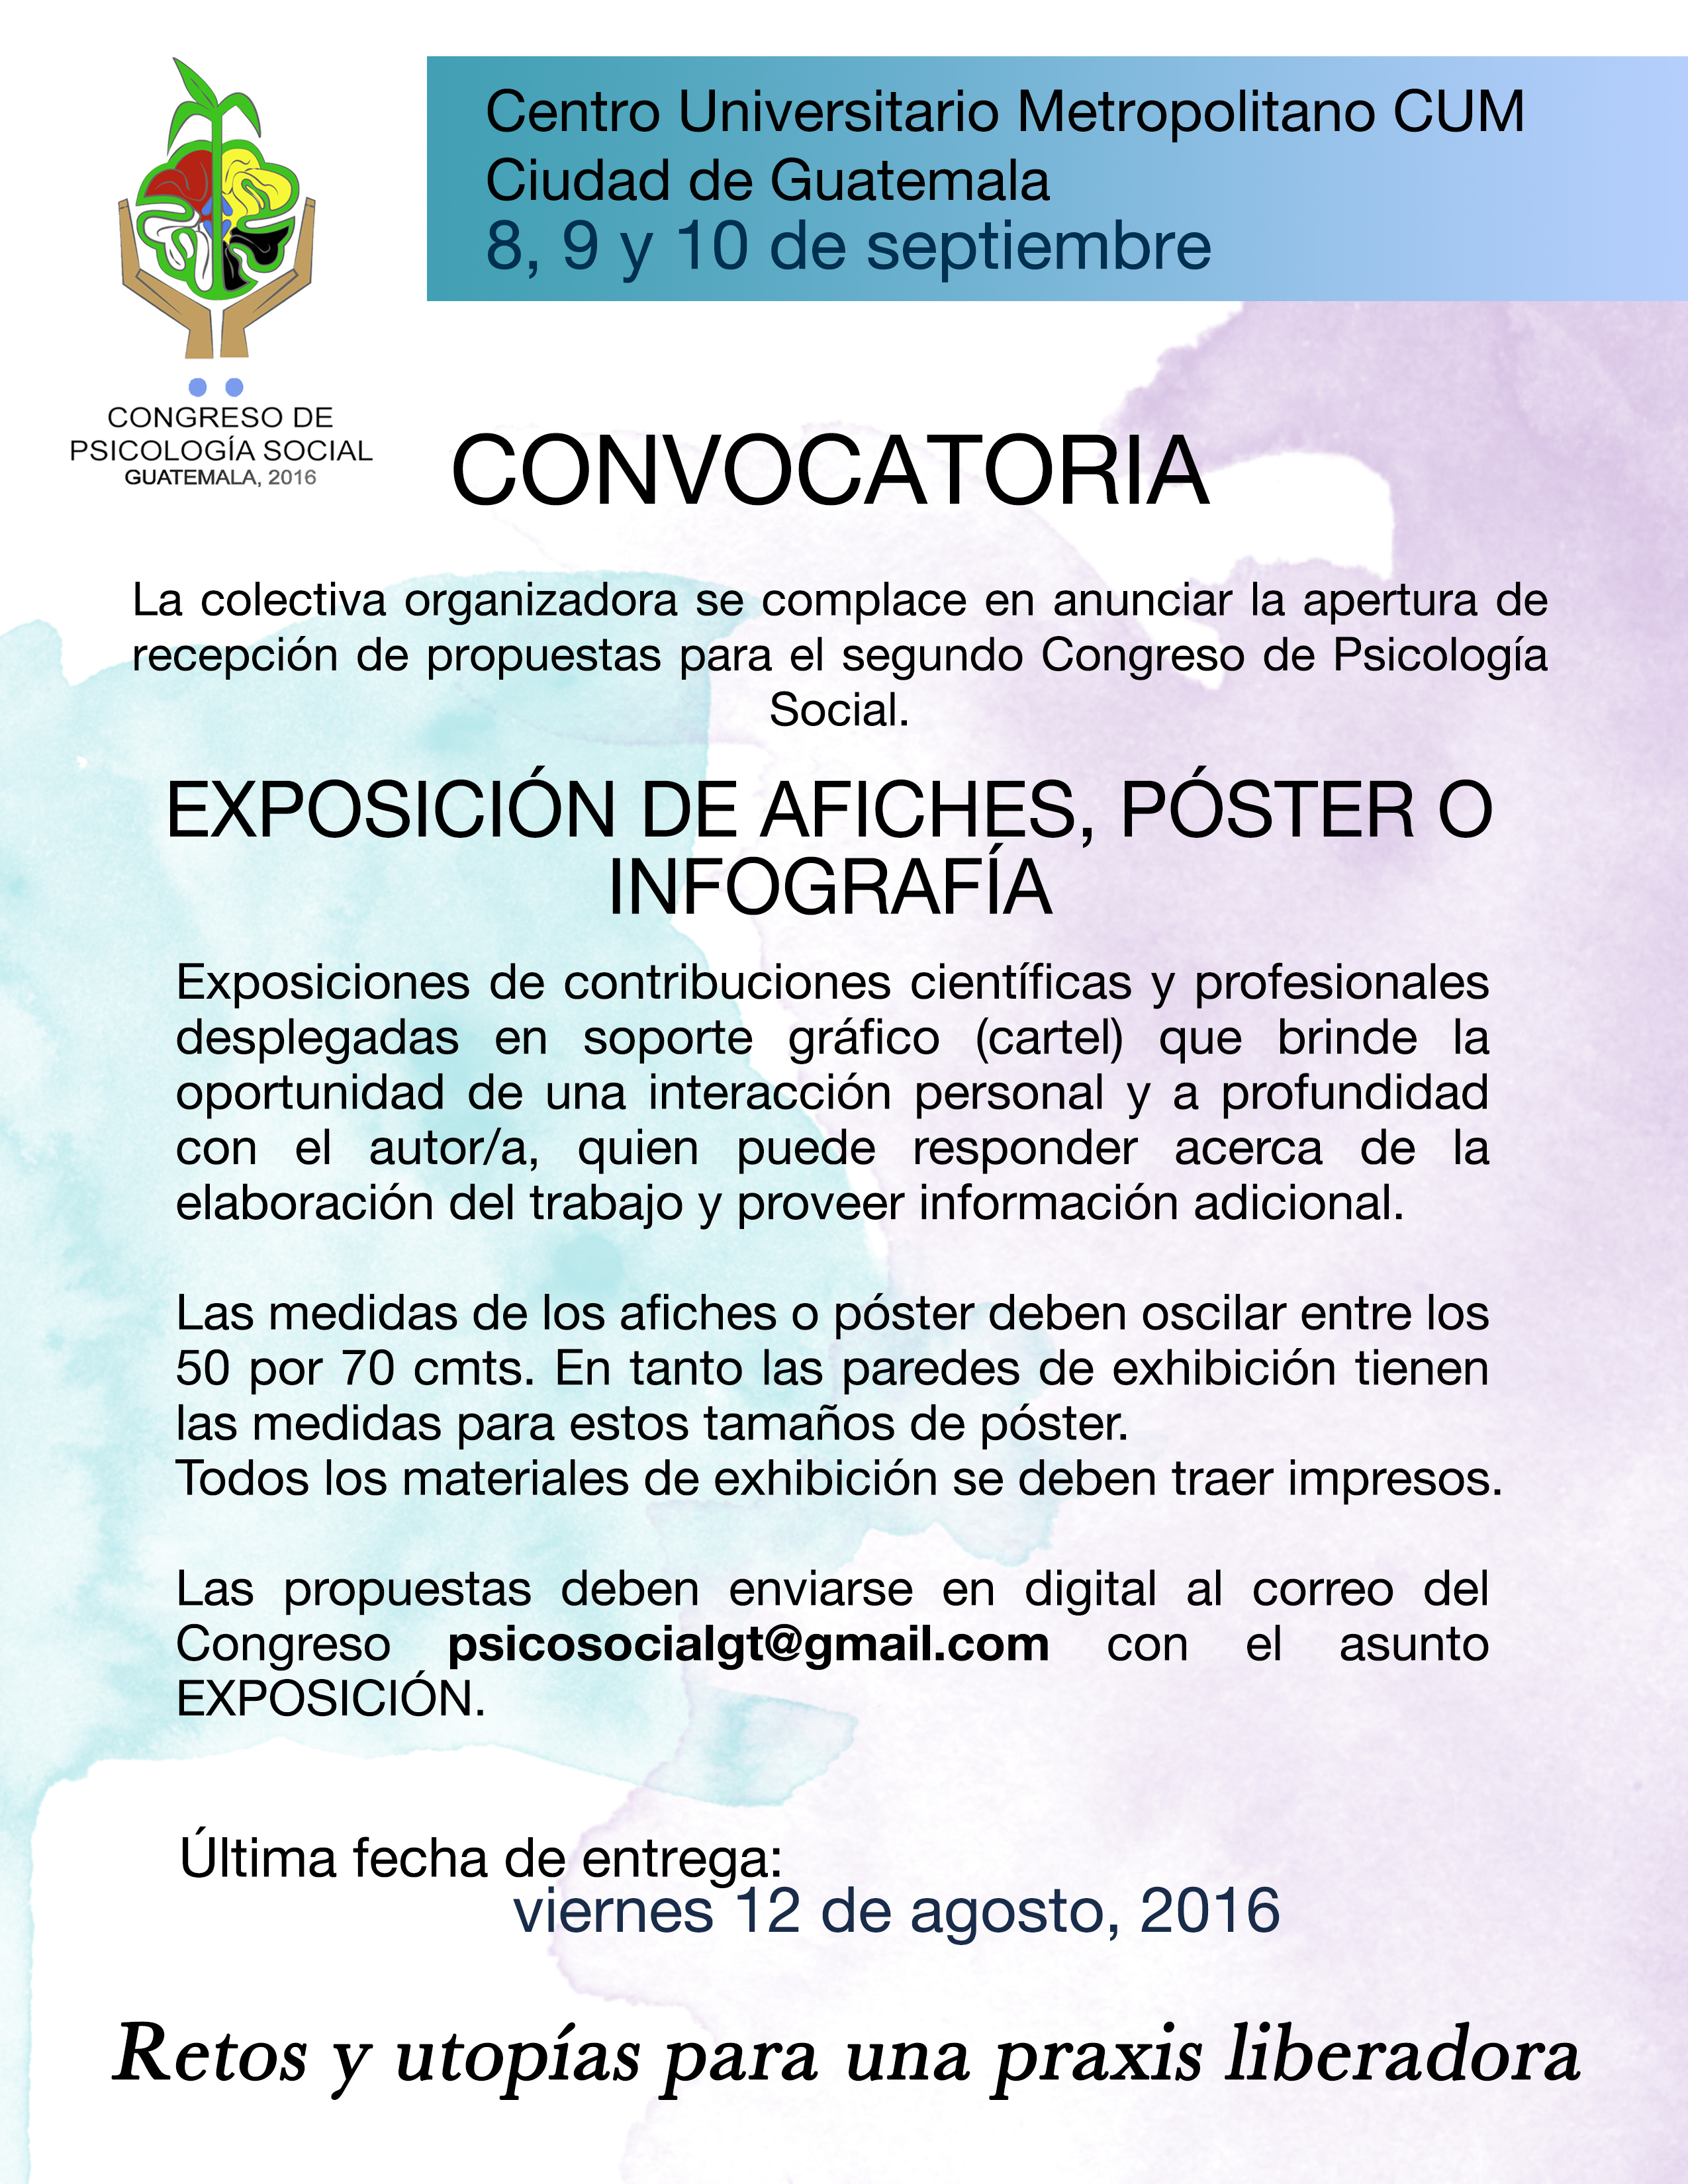 Exposiciones de afiches, póster o infografía